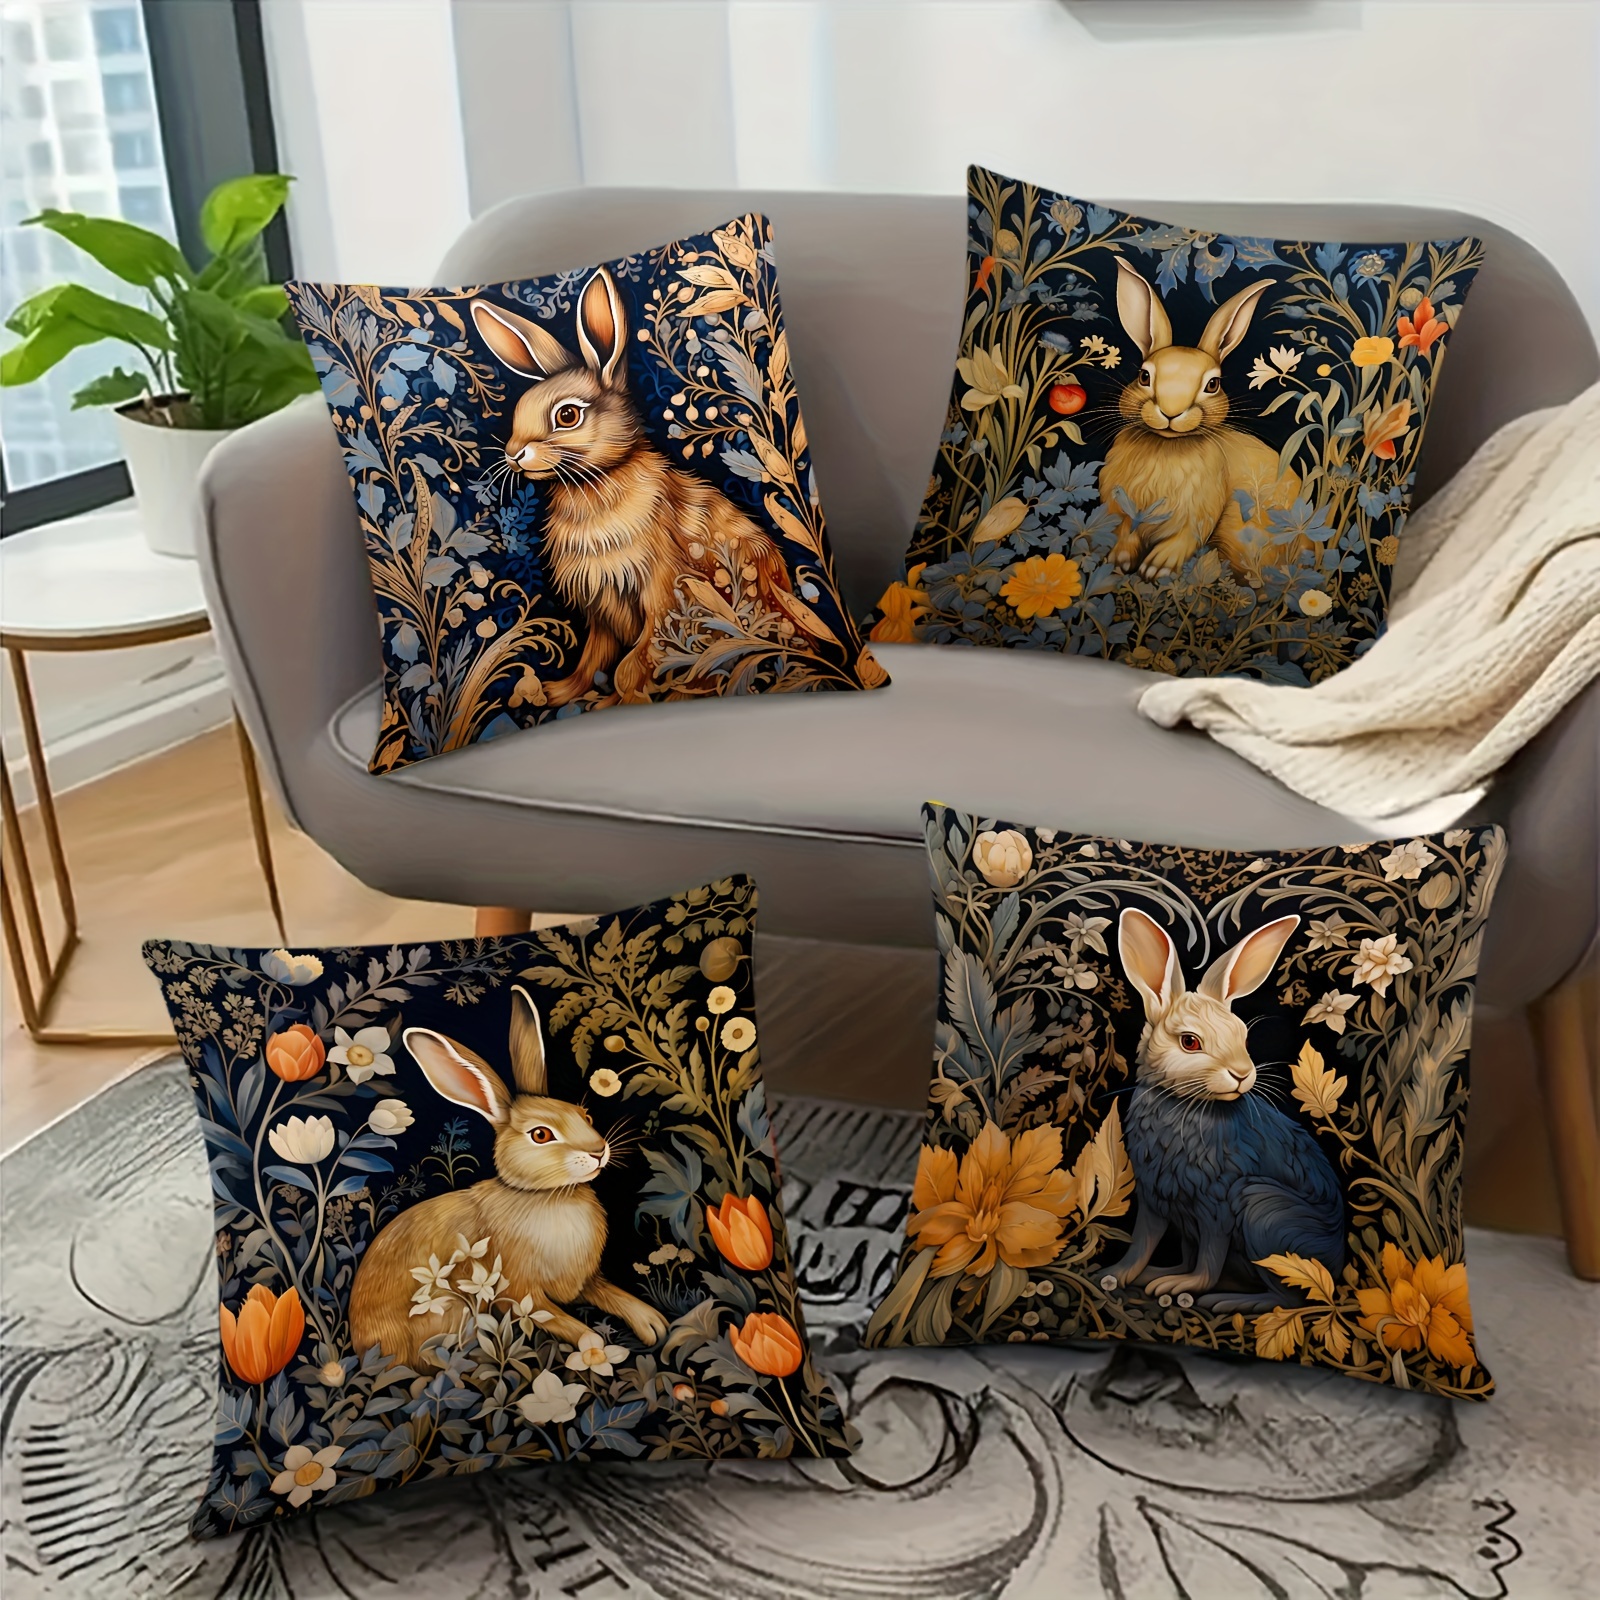 

Vintage Forest Art Rabbit Floral Short Fleece Throw Pillow Covers - 4 Pieces, 18x18 Inches, Zipper Closure, Machine Washable, Suitable For Various Room Types, Super Fine Fiber Material